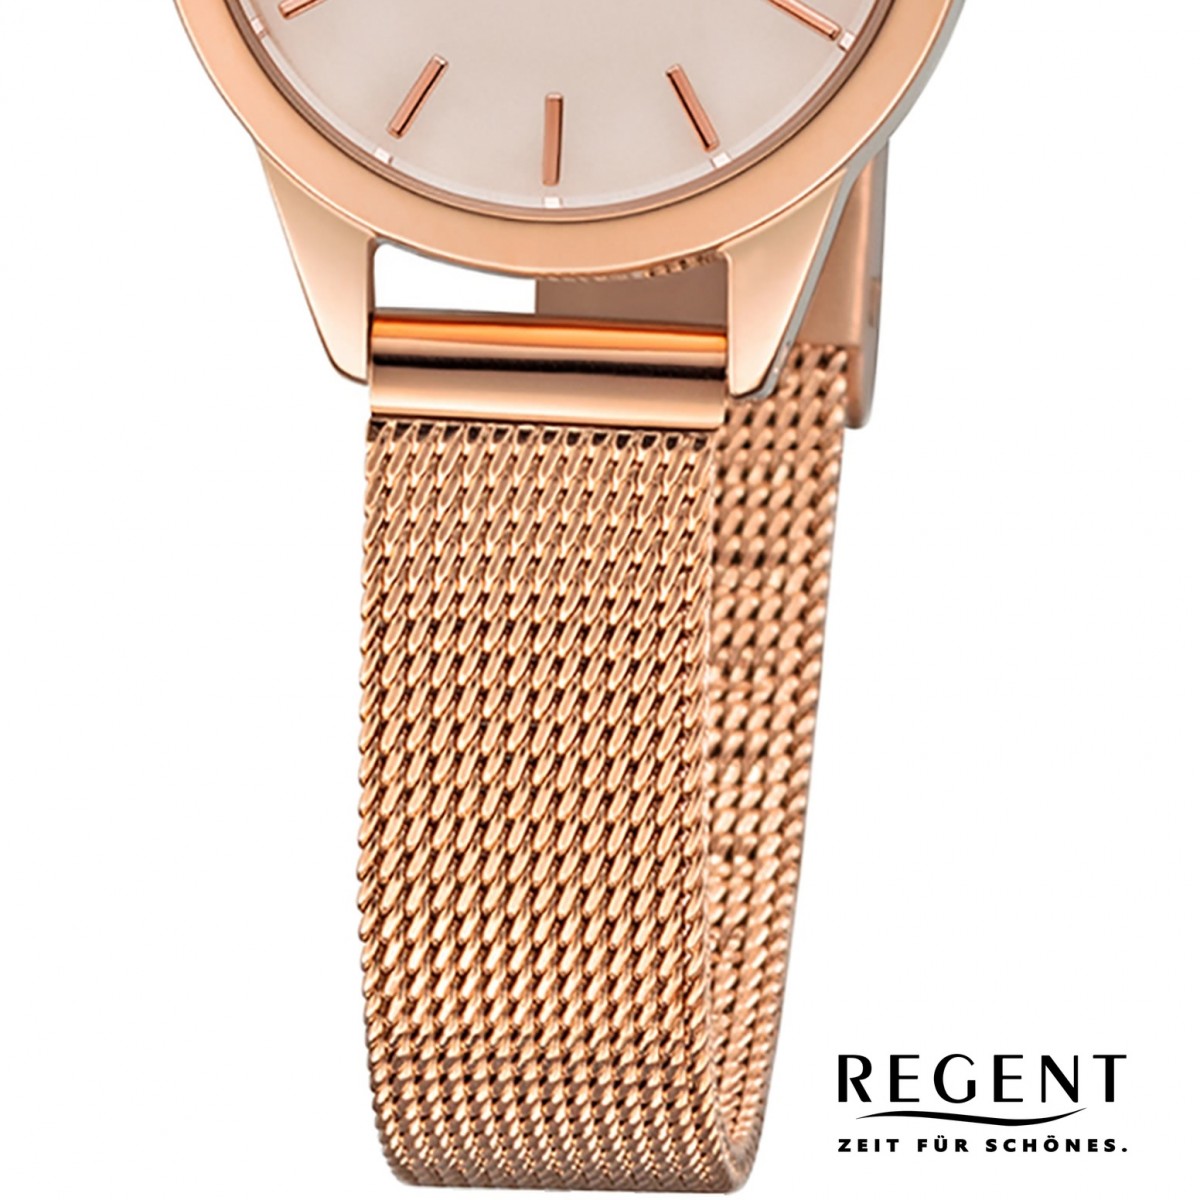 rosegold Metall Regent Armbanduhr Damen URF1167 Analog F-1167 Quarz-Uhr